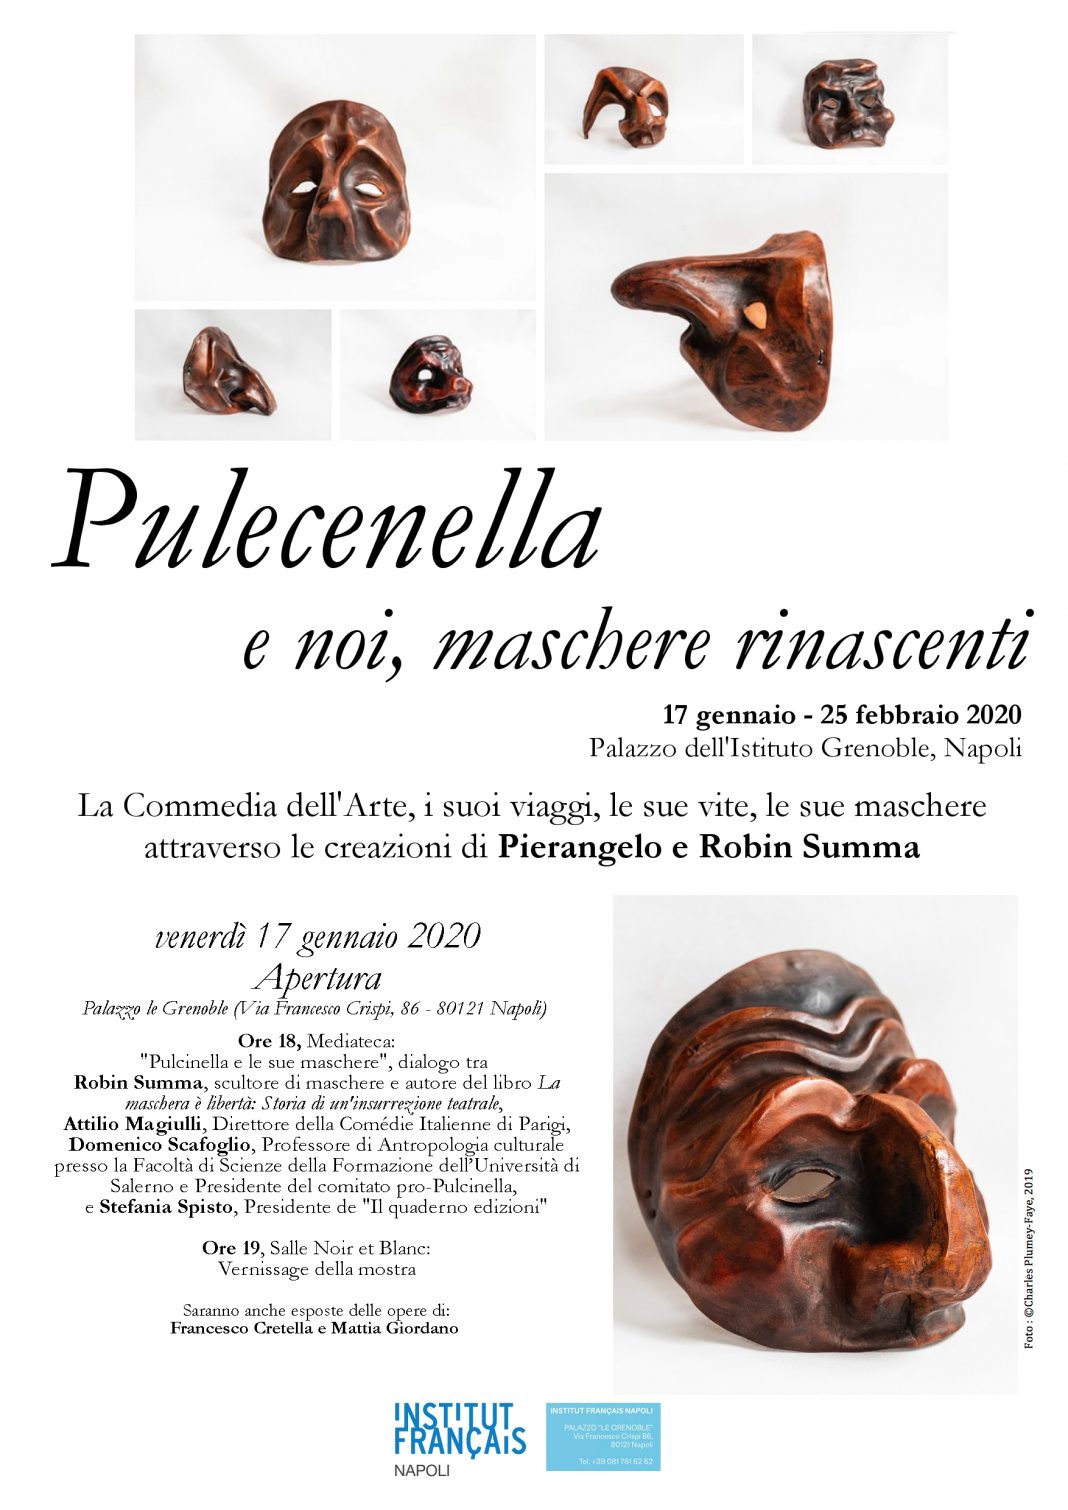 Pulecenella e noi, maschere rinascentihttps://www.exibart.com/repository/media/formidable/11/affichette-expo-grenoble3-1068x1510.jpg